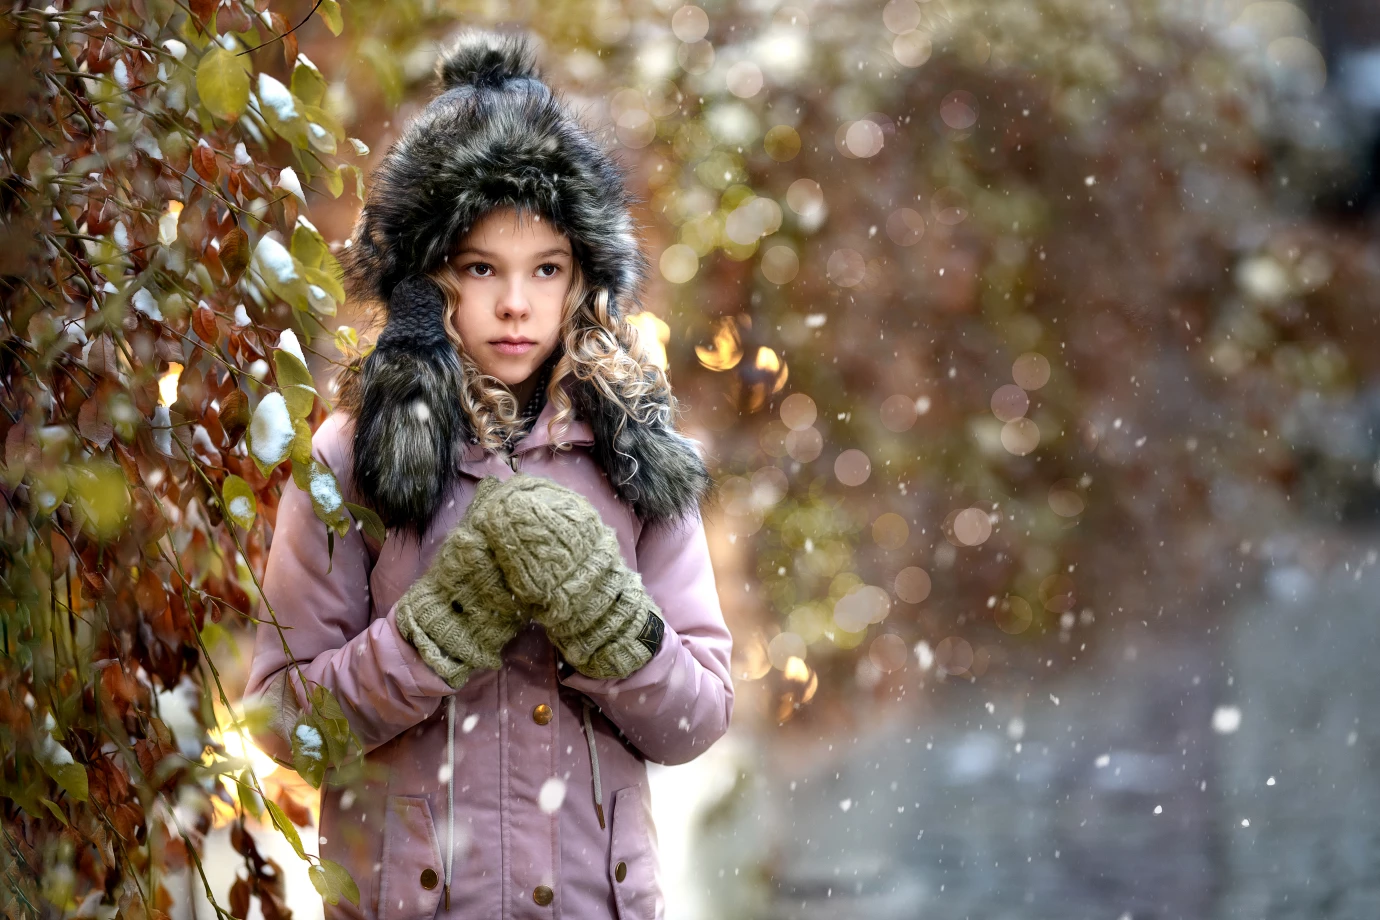 fotograf lublin natalia-rudenco-fotografia portfolio zimowe sesje zdjeciowe zima snieg